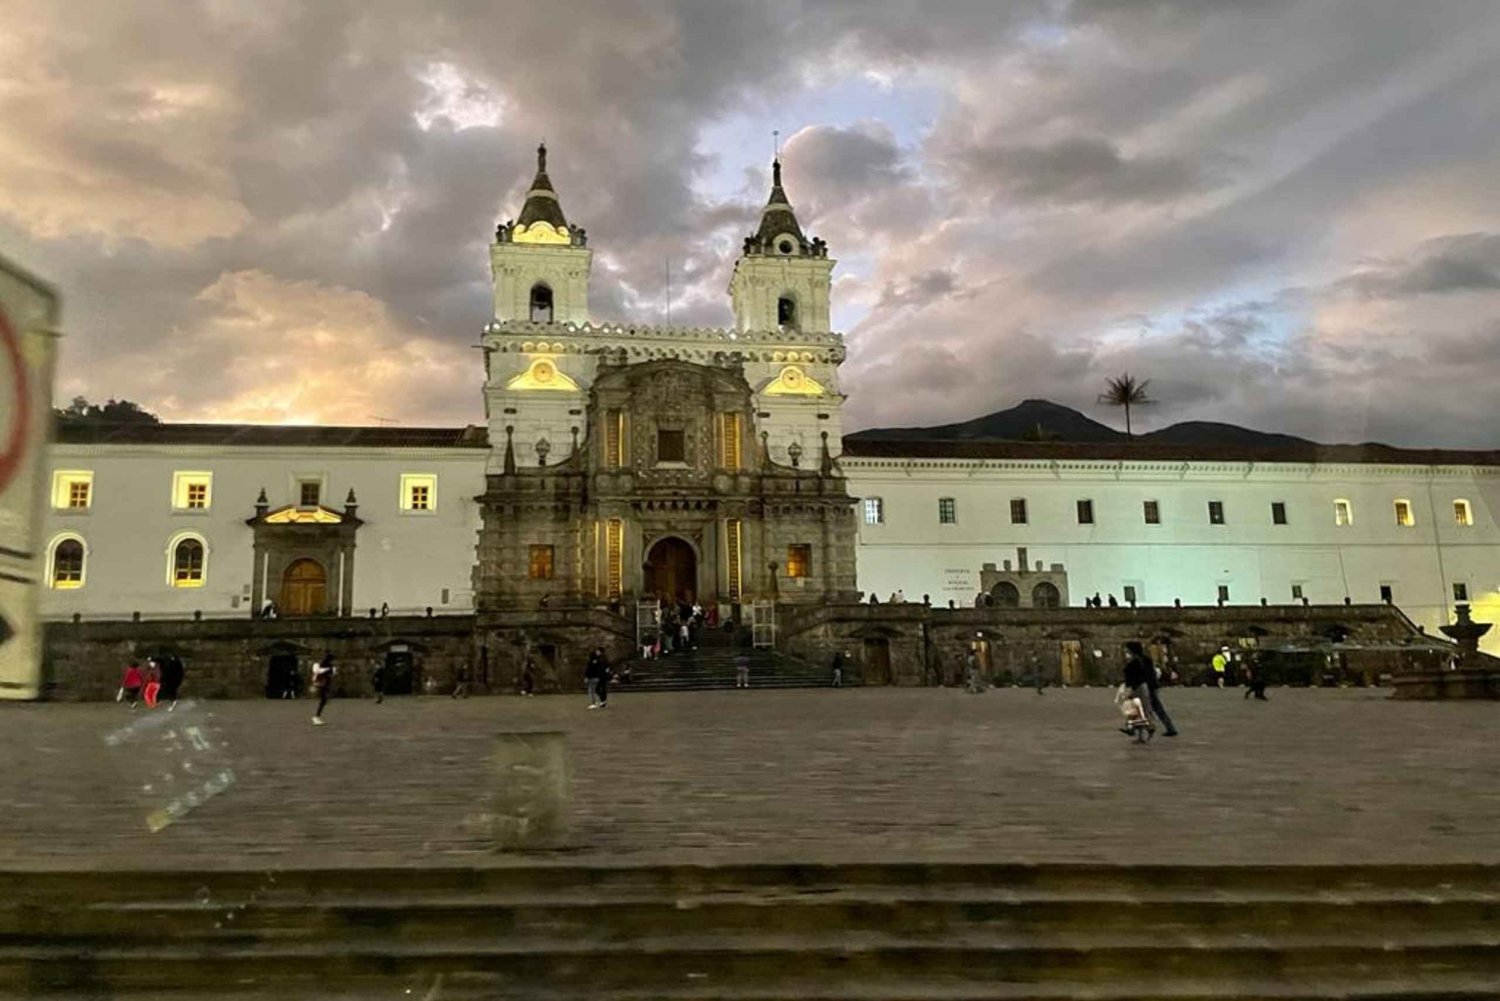 Stare miasto Quito i lokalne życie